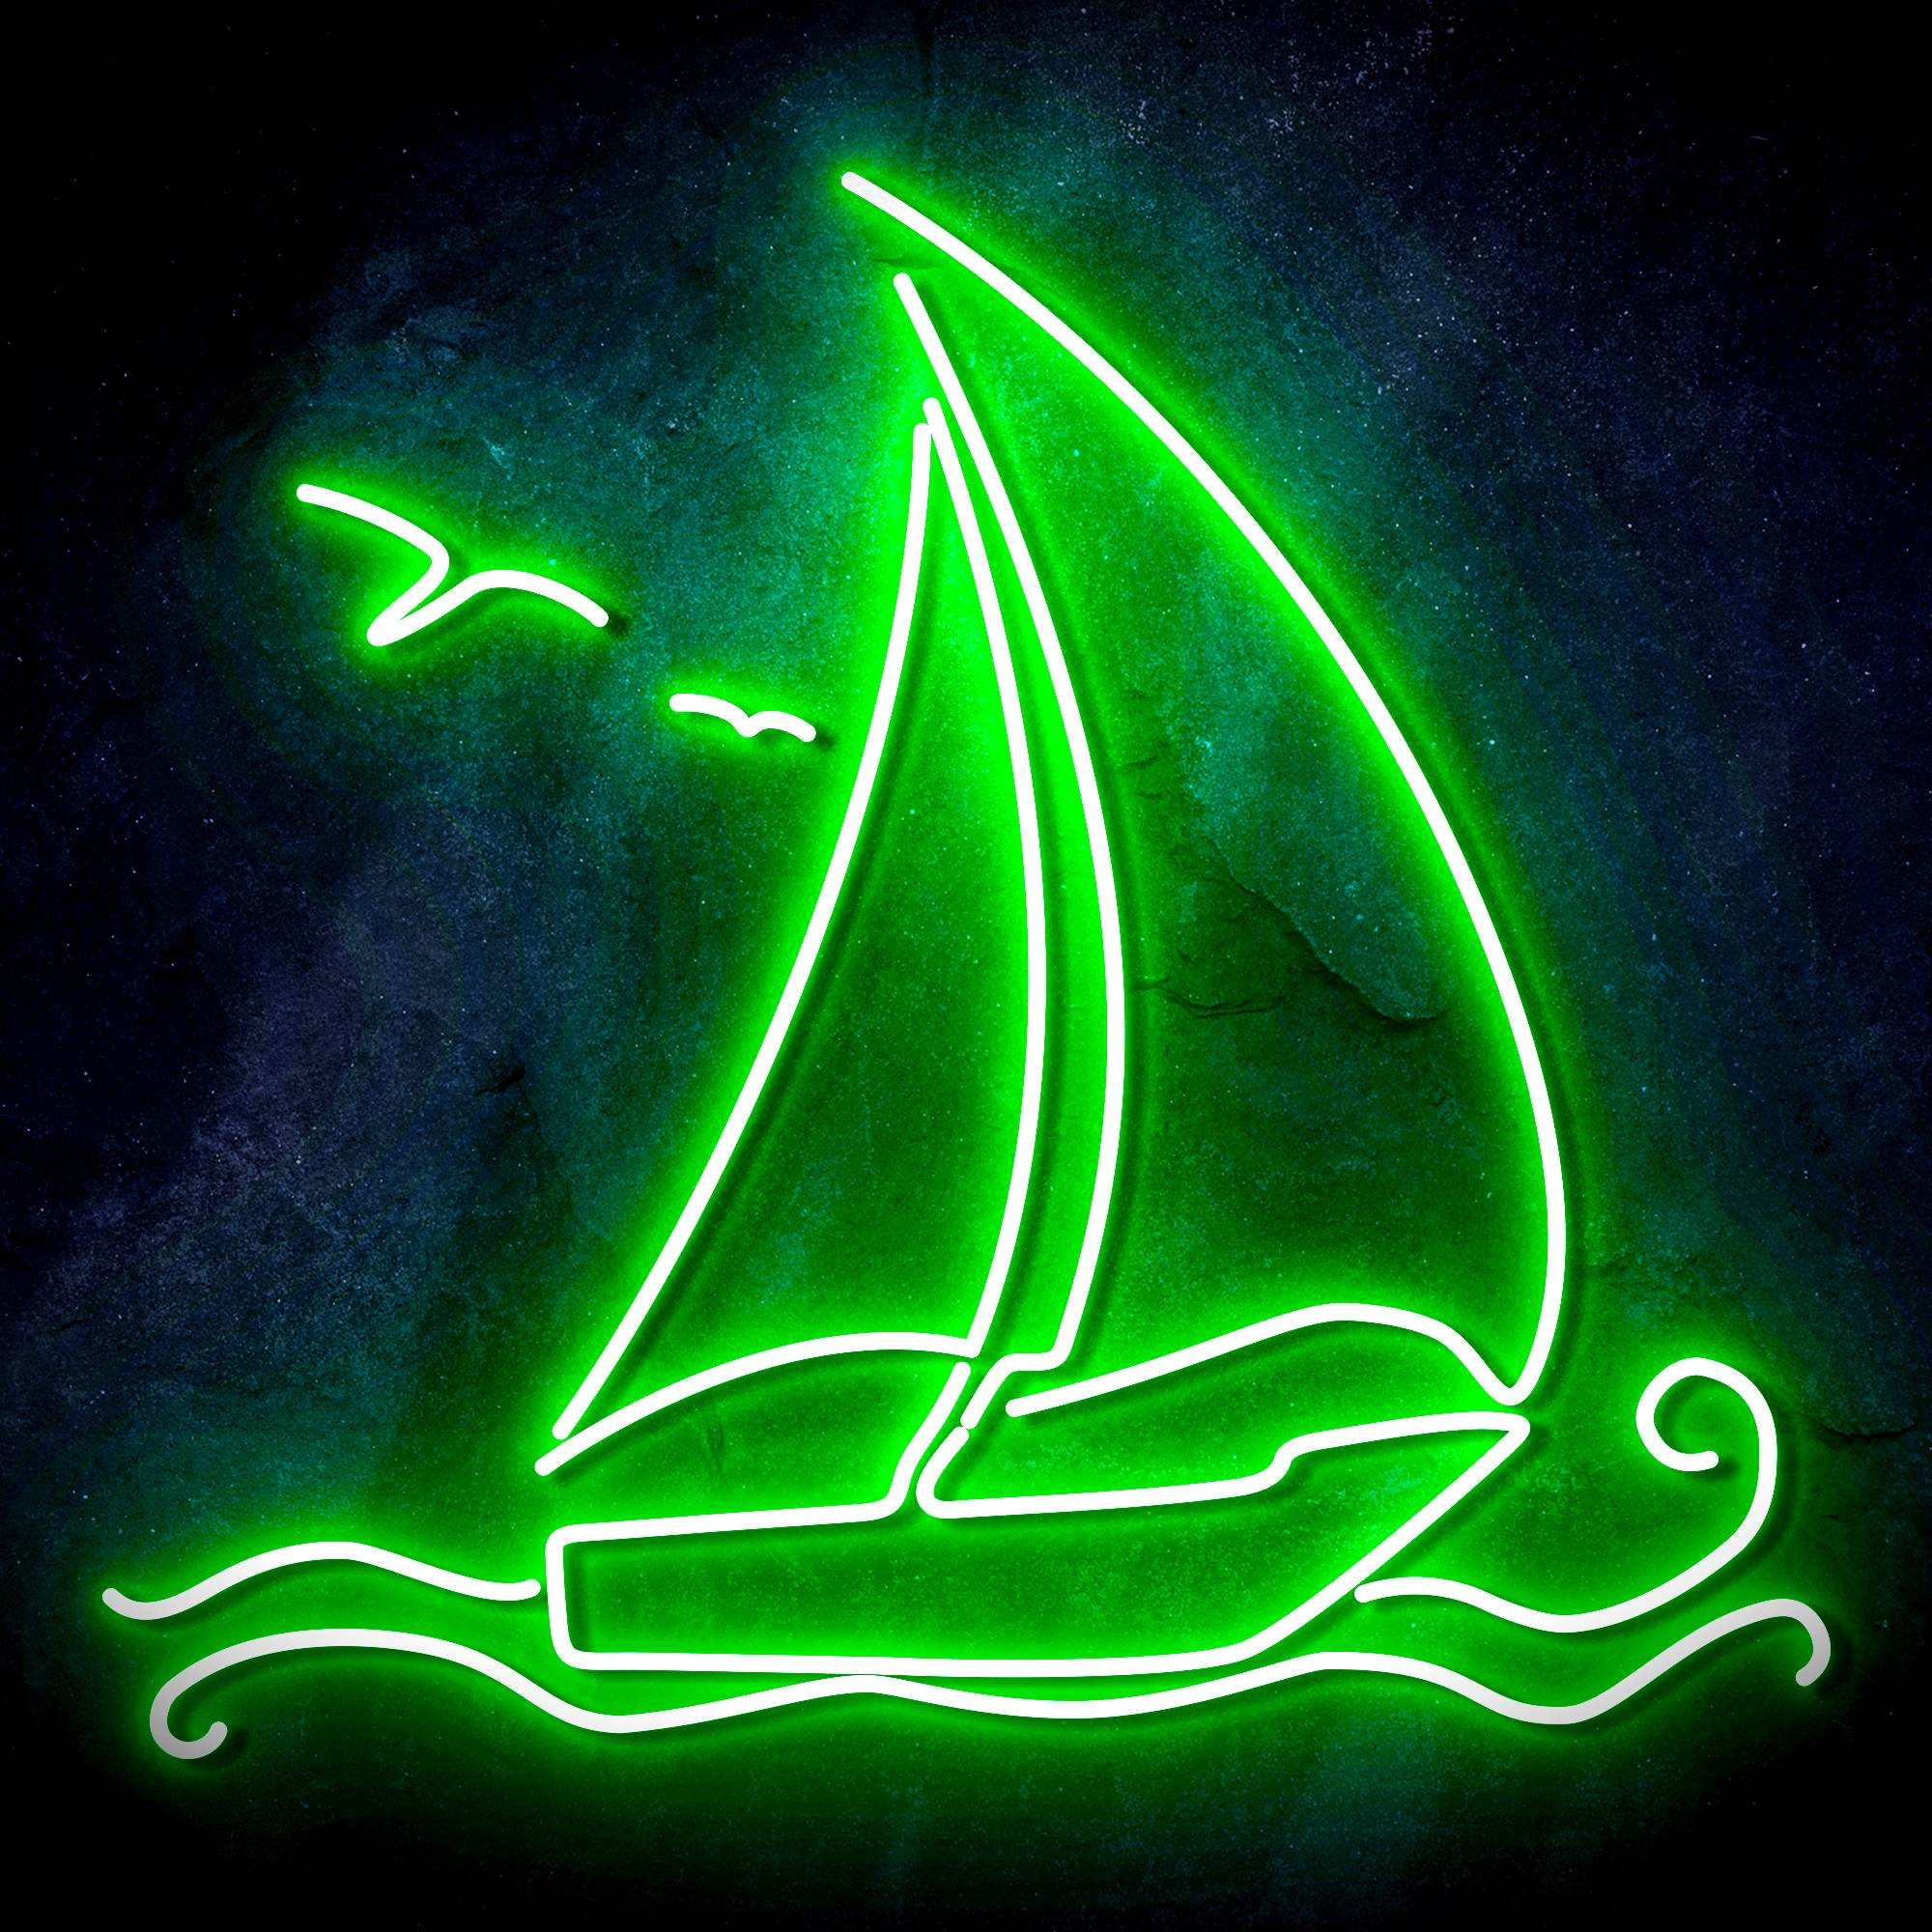 Windsurfing Yacht LED Neon Sign